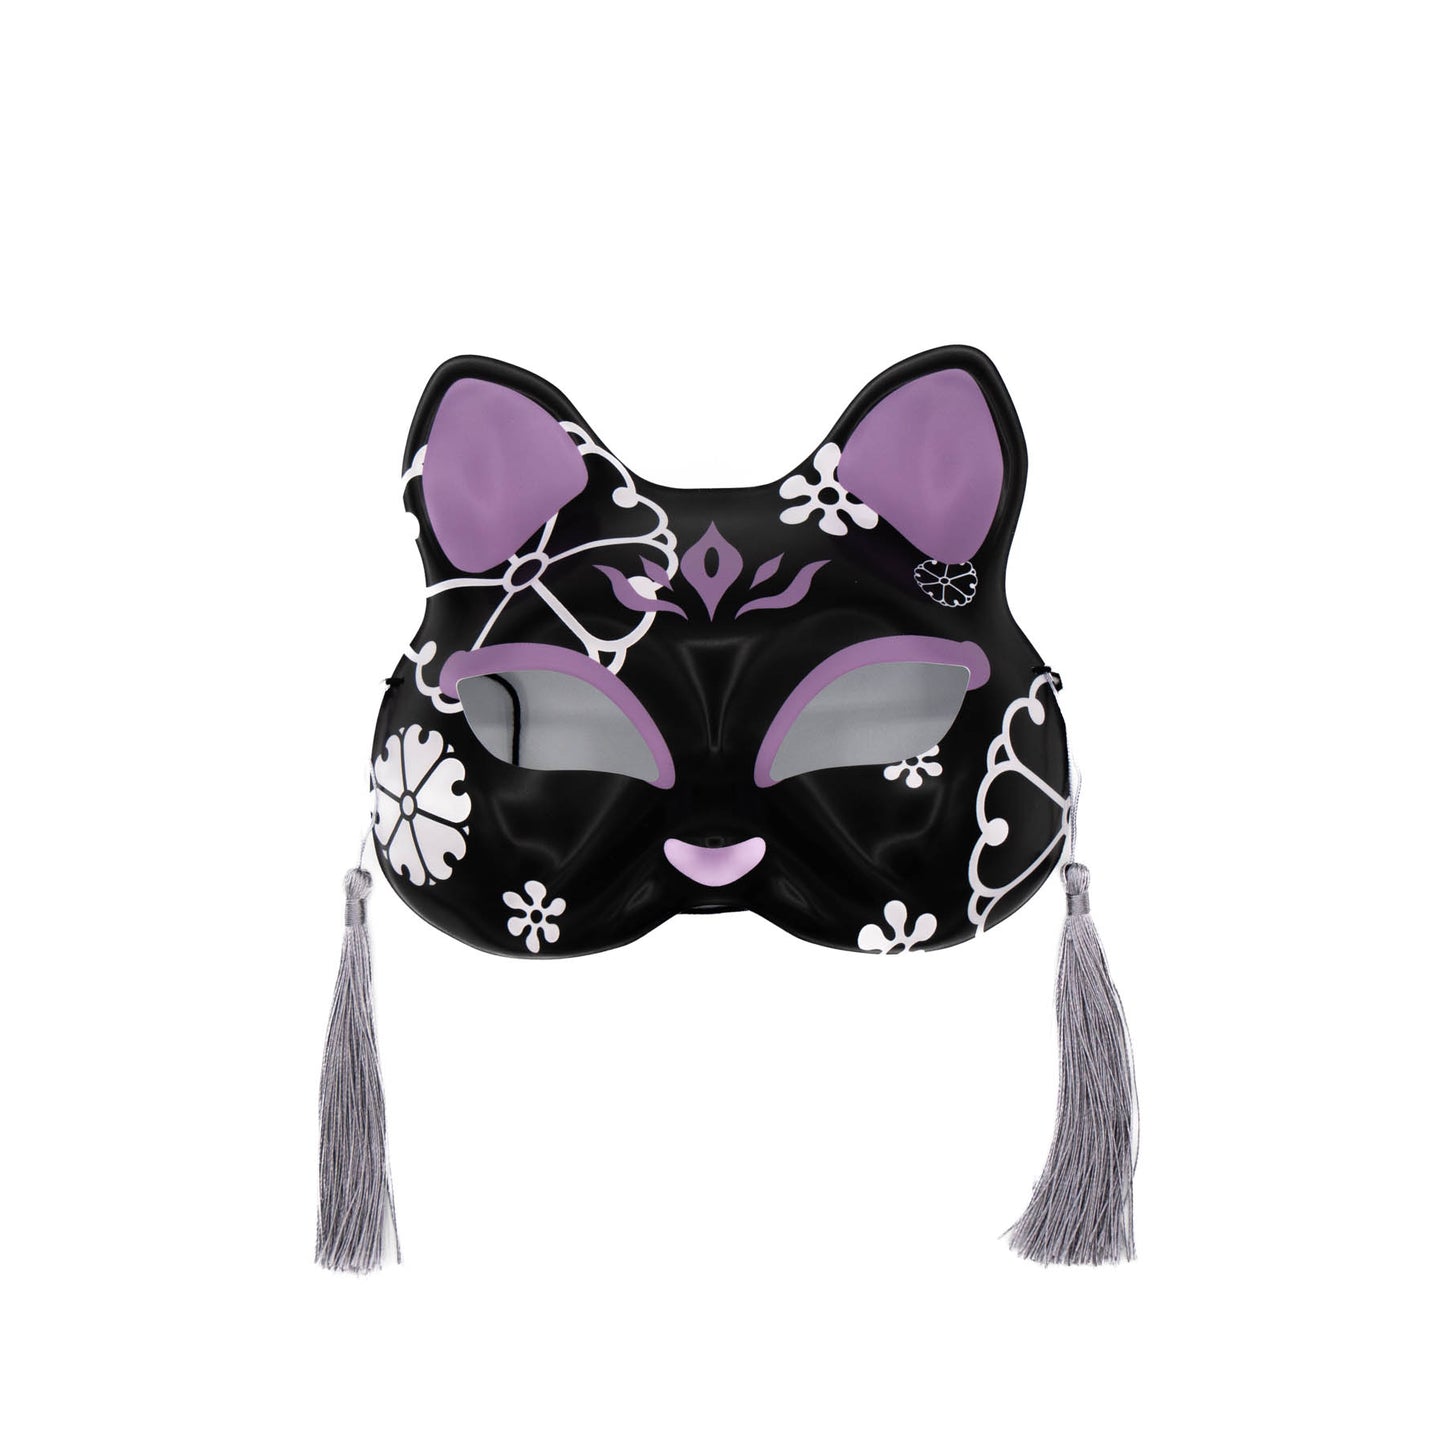 Japanese Cat Mask - Black and Purple